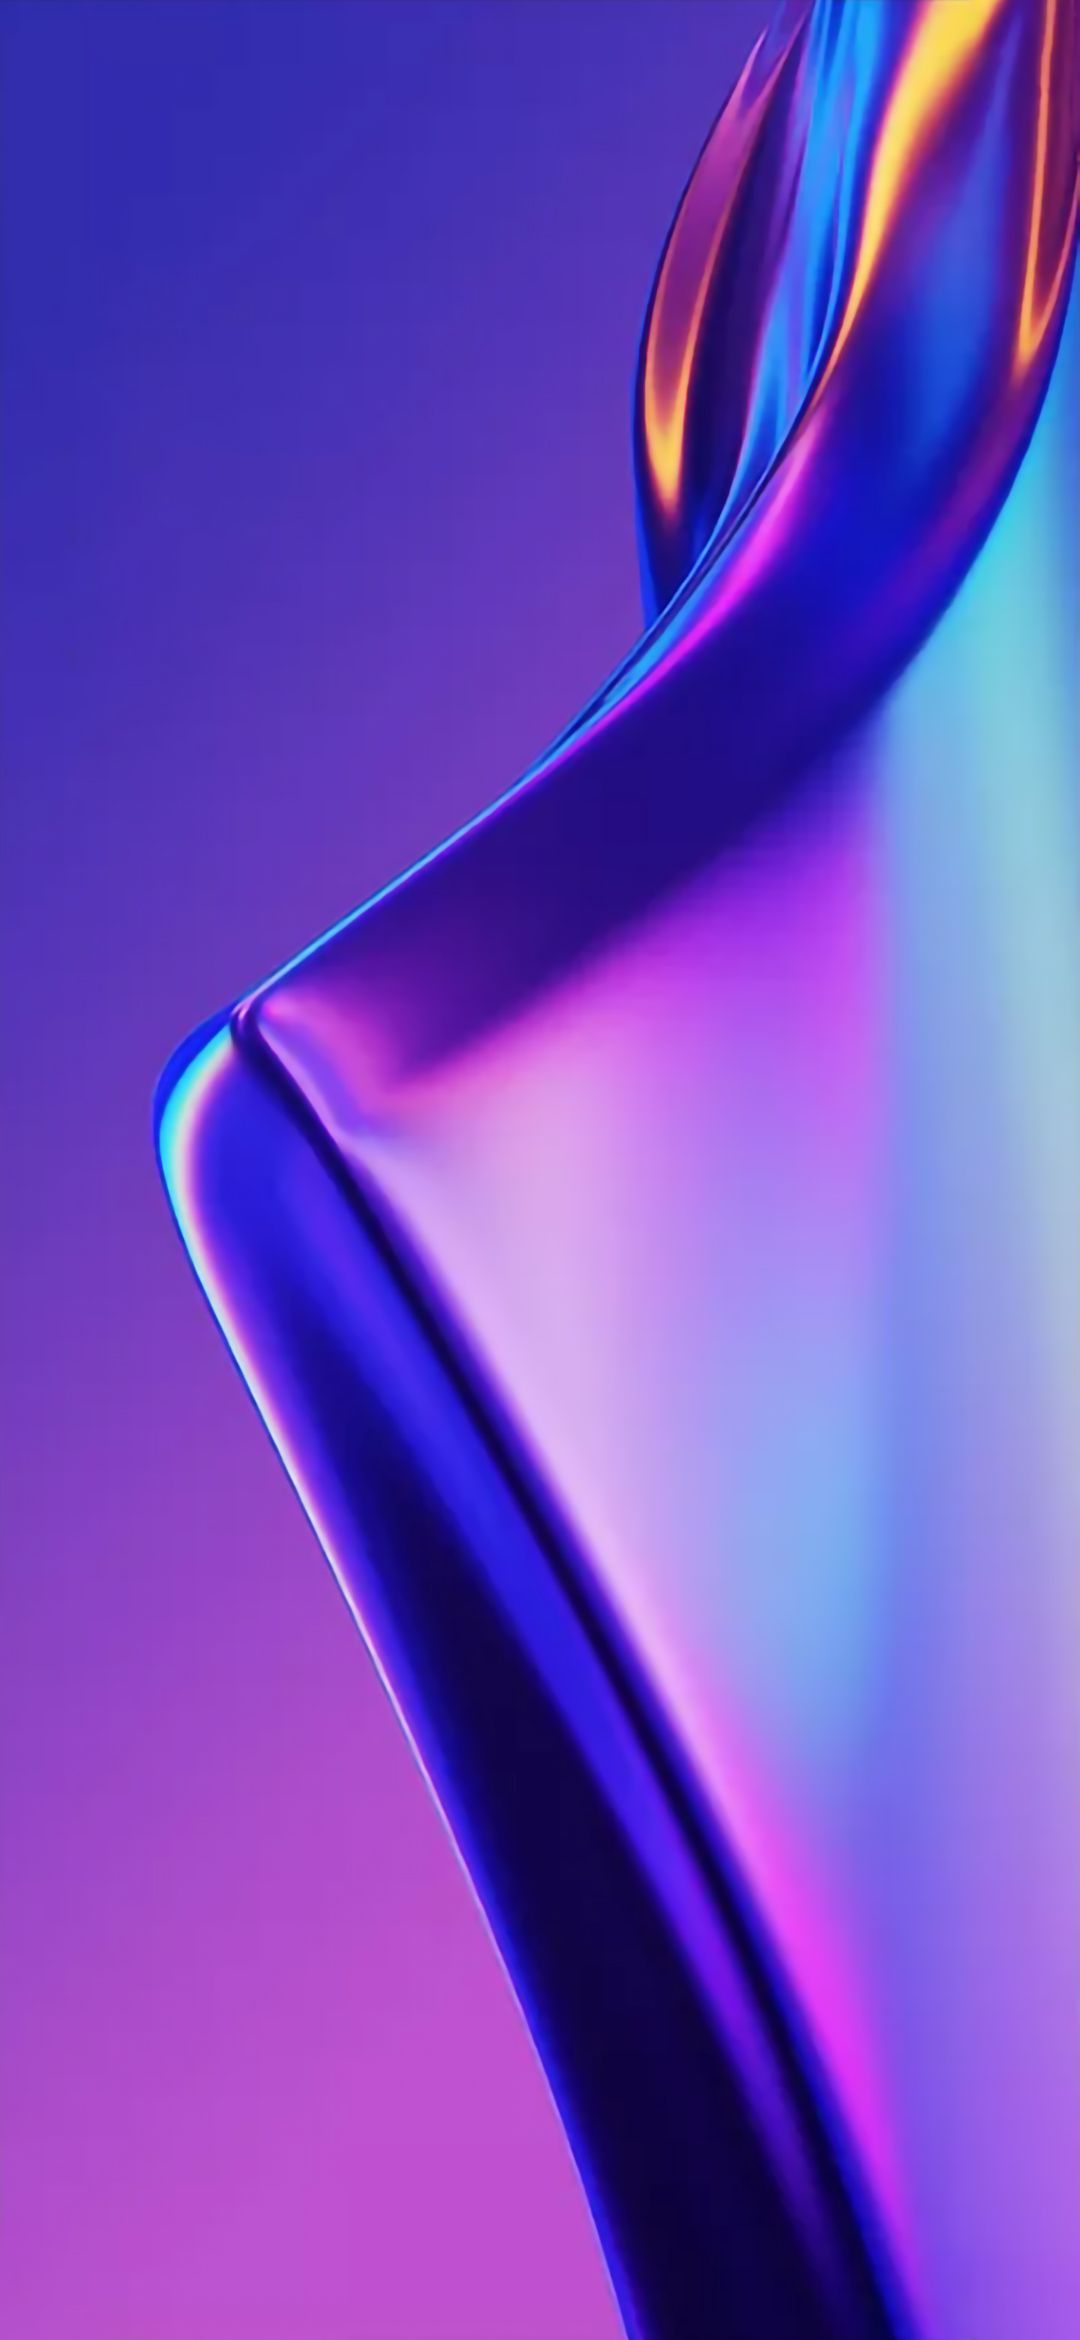 maravillosos fondos de pantalla para móviles,azul,violeta,púrpura,agua,ligero